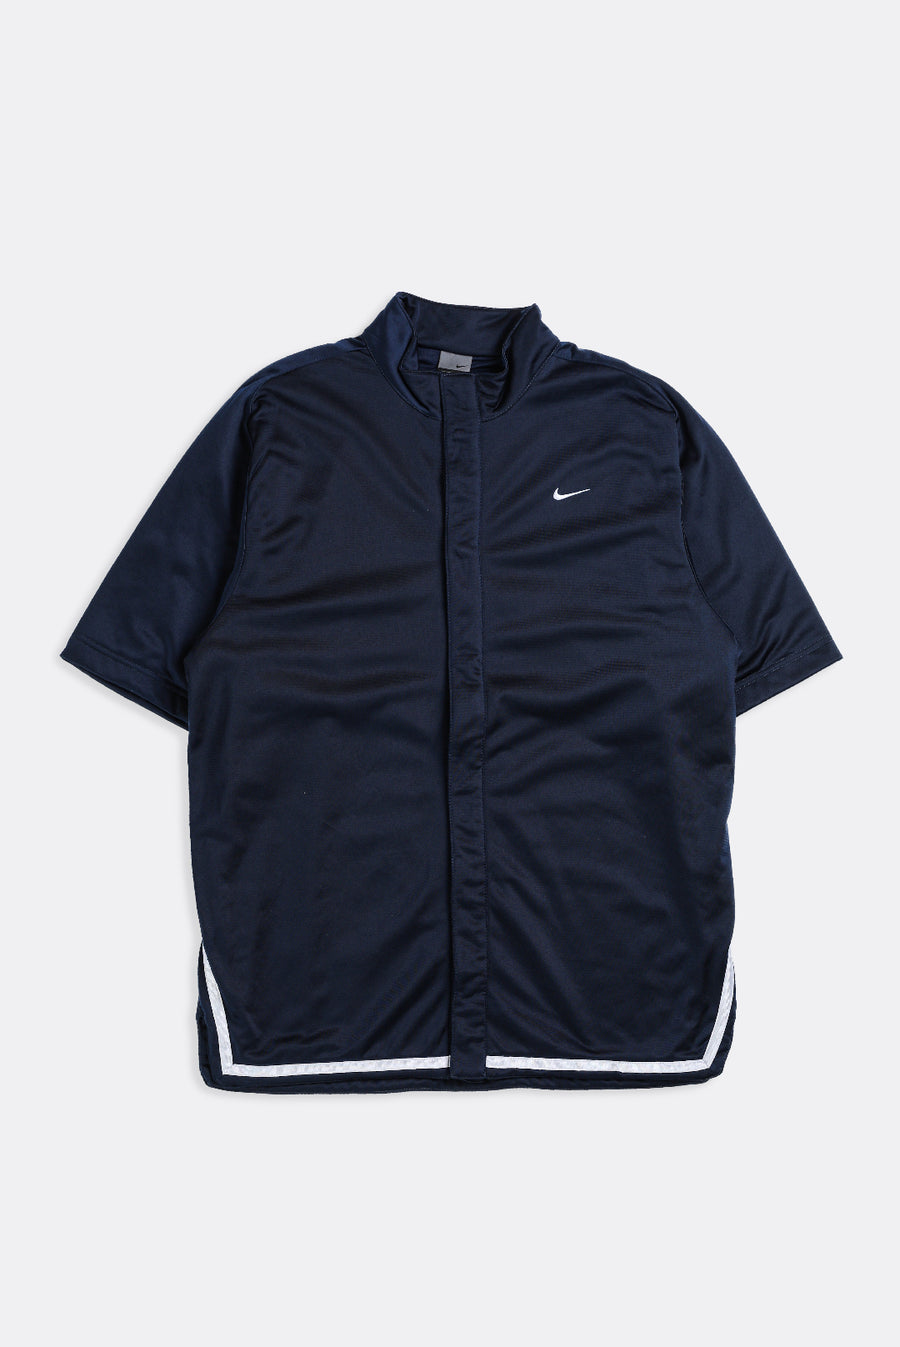 Vintage Nike Jersey